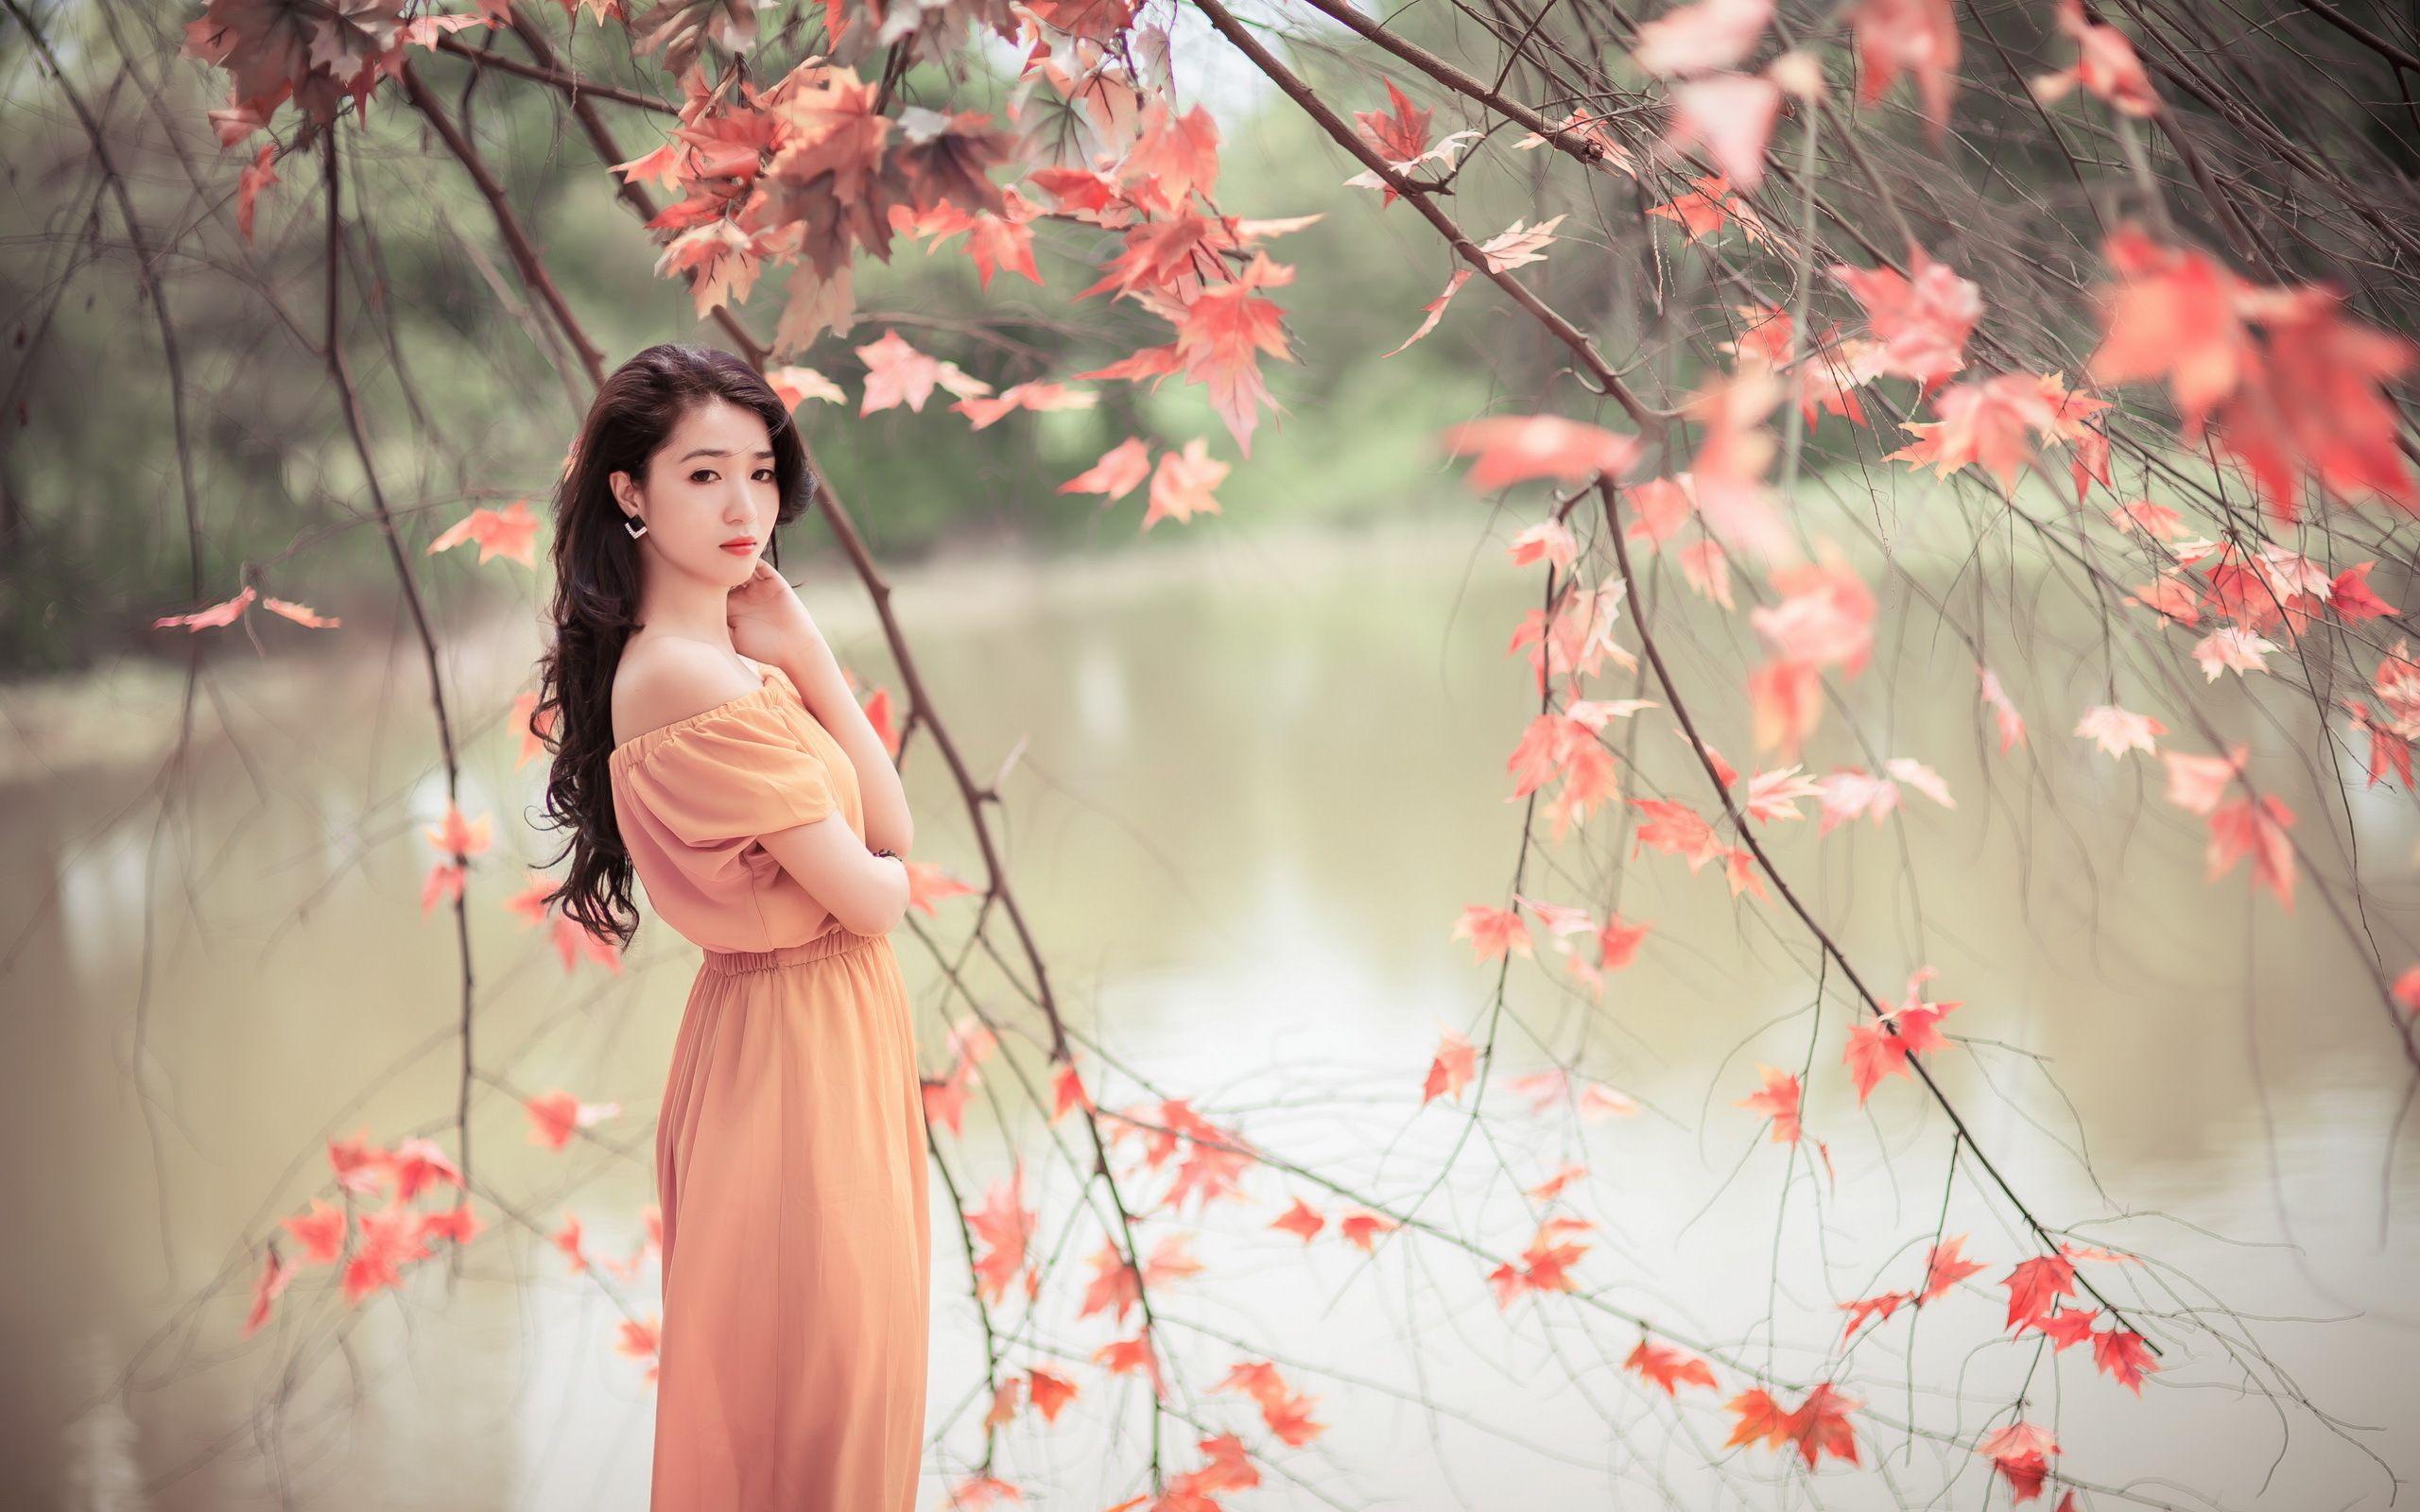 Beautiful Chinese Girl фото в формате Jpeg много фотографий в хорошем Hd качестве